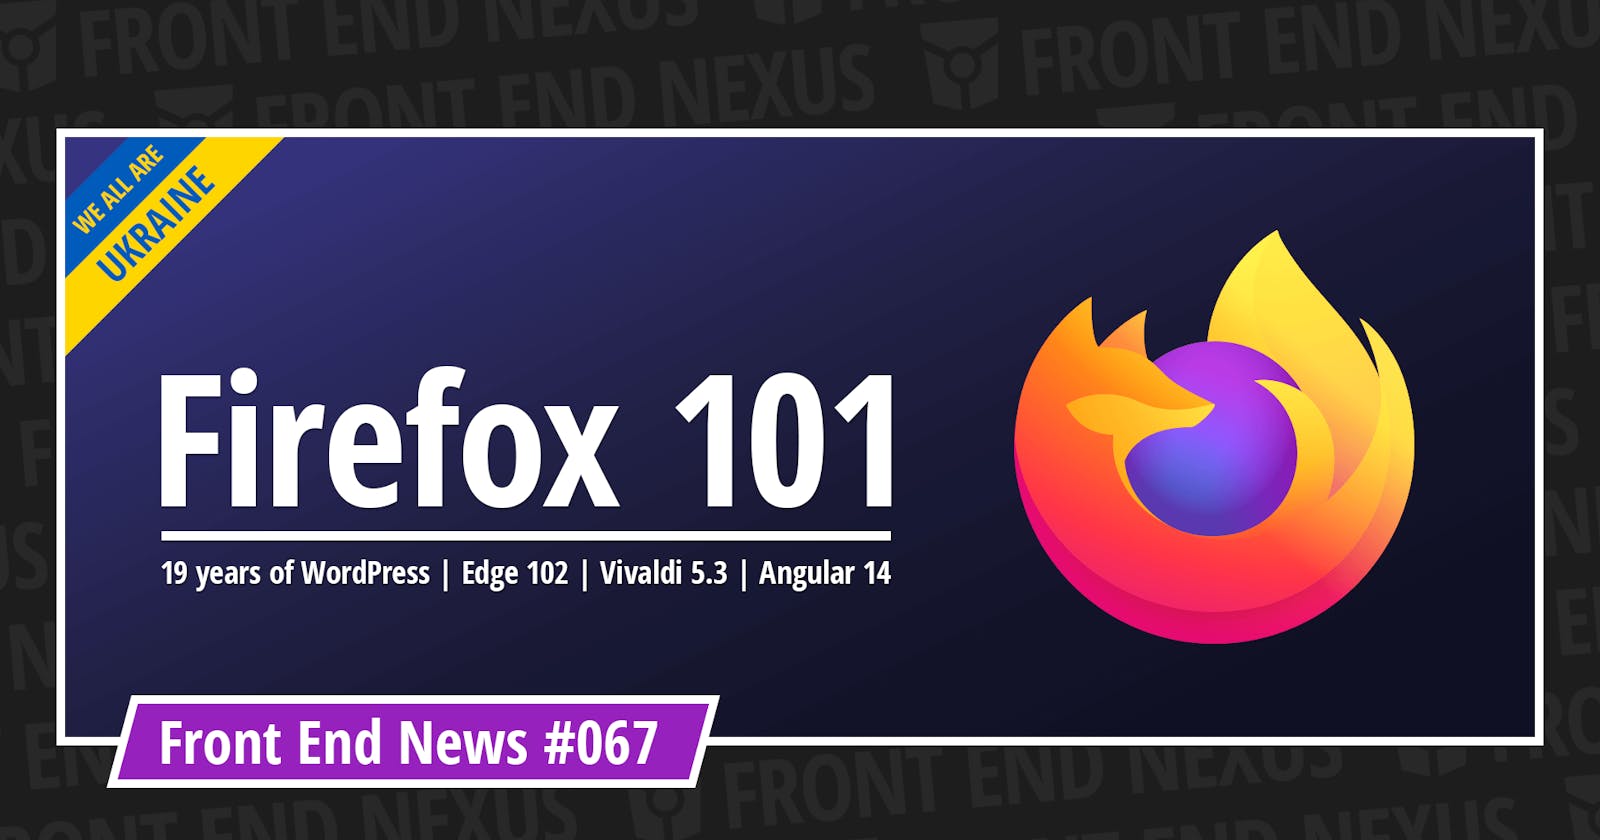 Firefox 101, 19 years of WordPress, Edge 102, Vivaldi 5.3, Angular 14, and more | Front End News #067